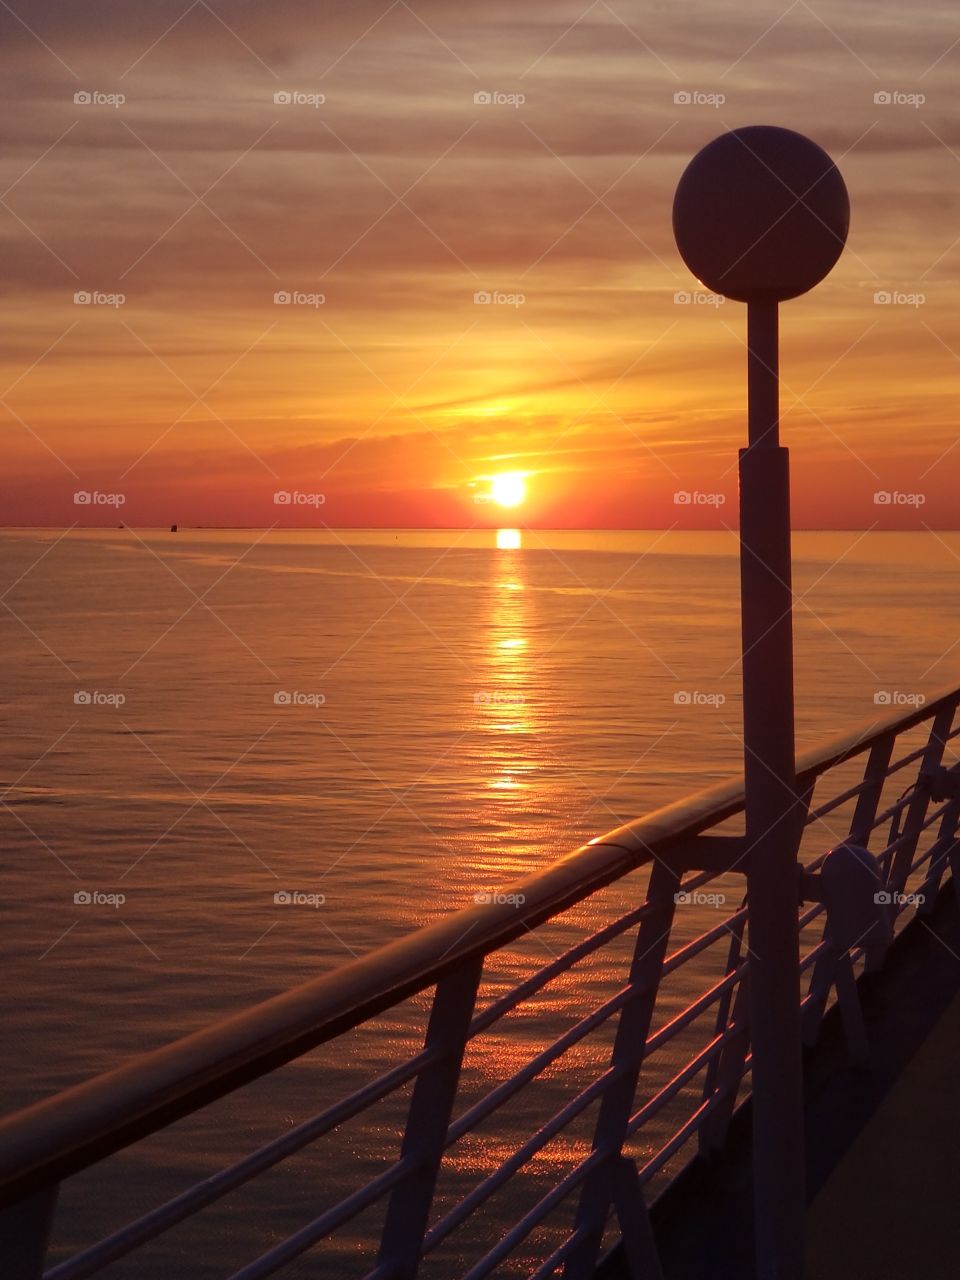 Cruise Ship sunset